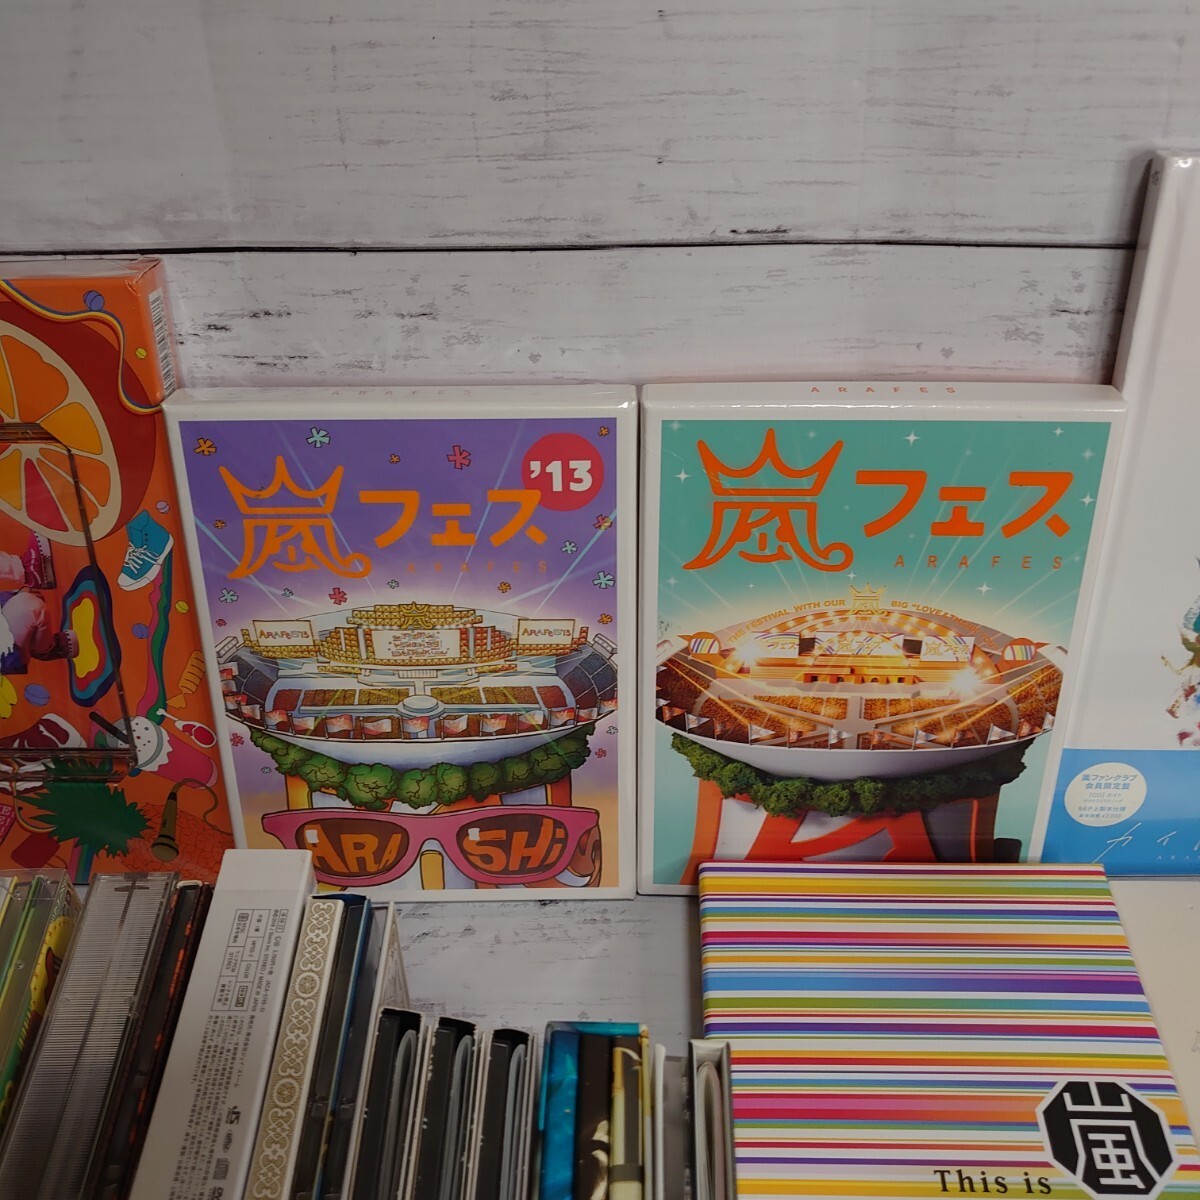 1 jpy start Johnny's set sale storm KinKi Kids TOKIO News.jani- V6 other limited goods CD DVD large amount junk treatment 